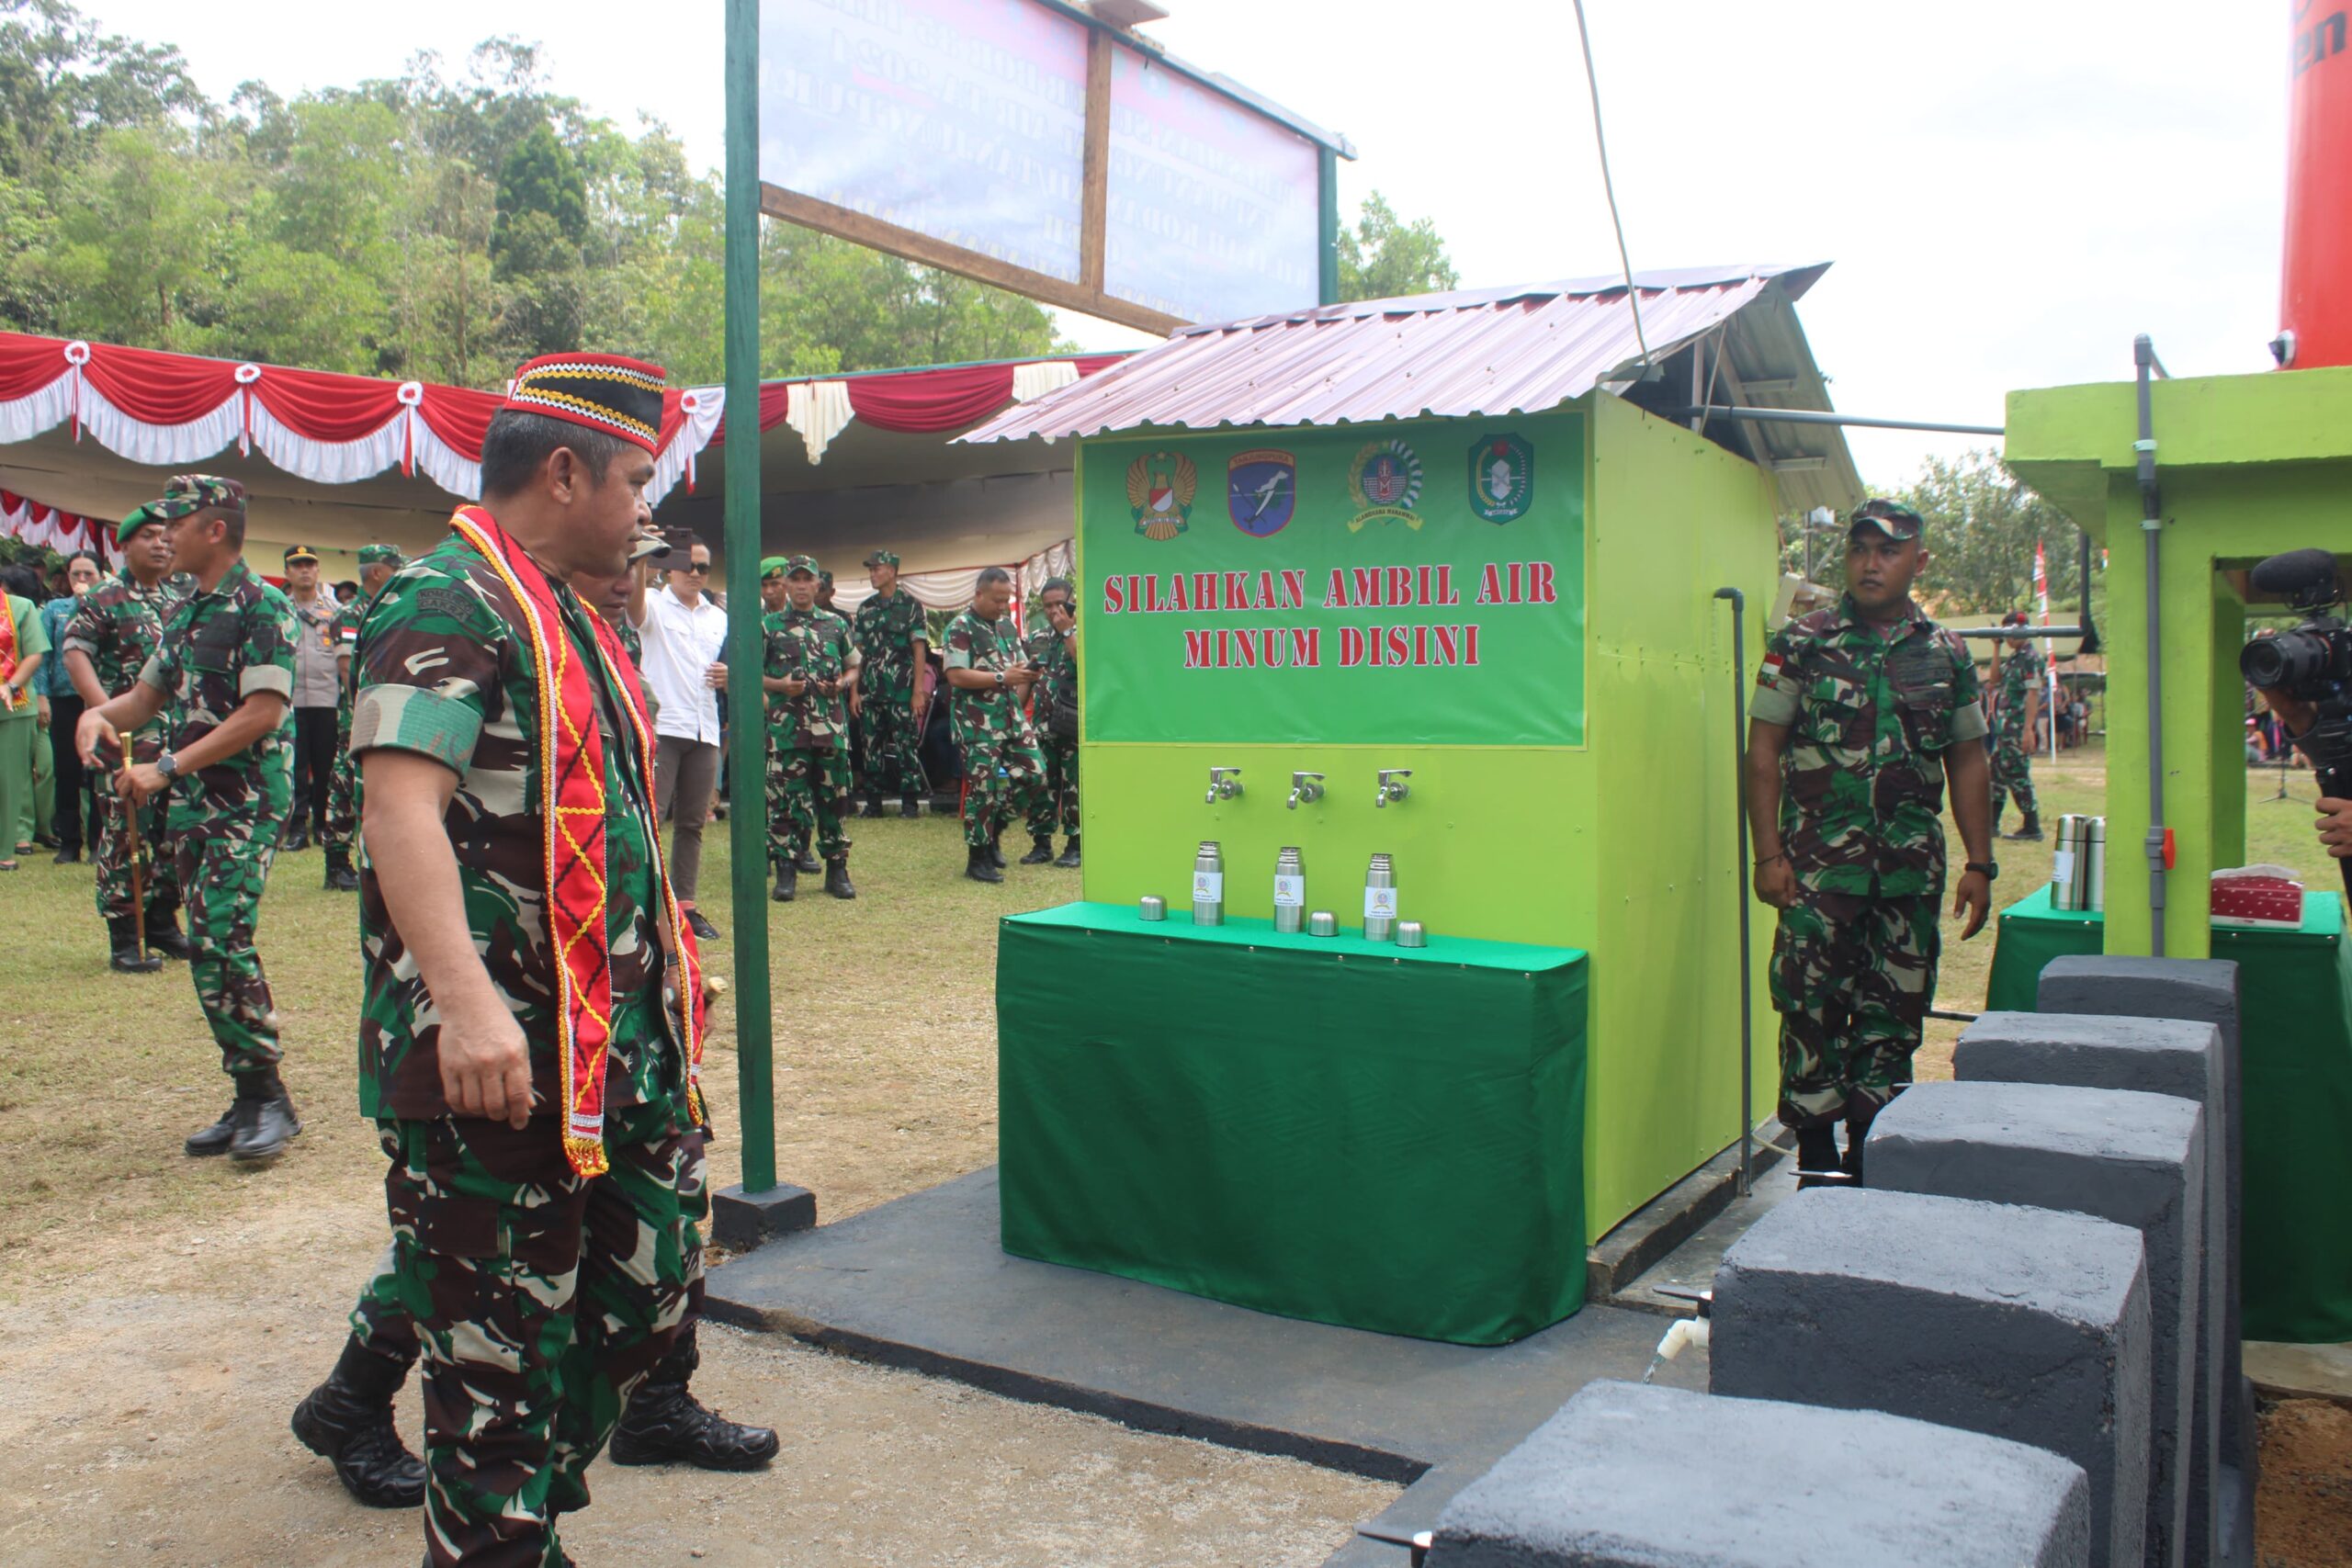 TNI AD Manunggal Air Datang, Warga Perbatasan Pun Senang